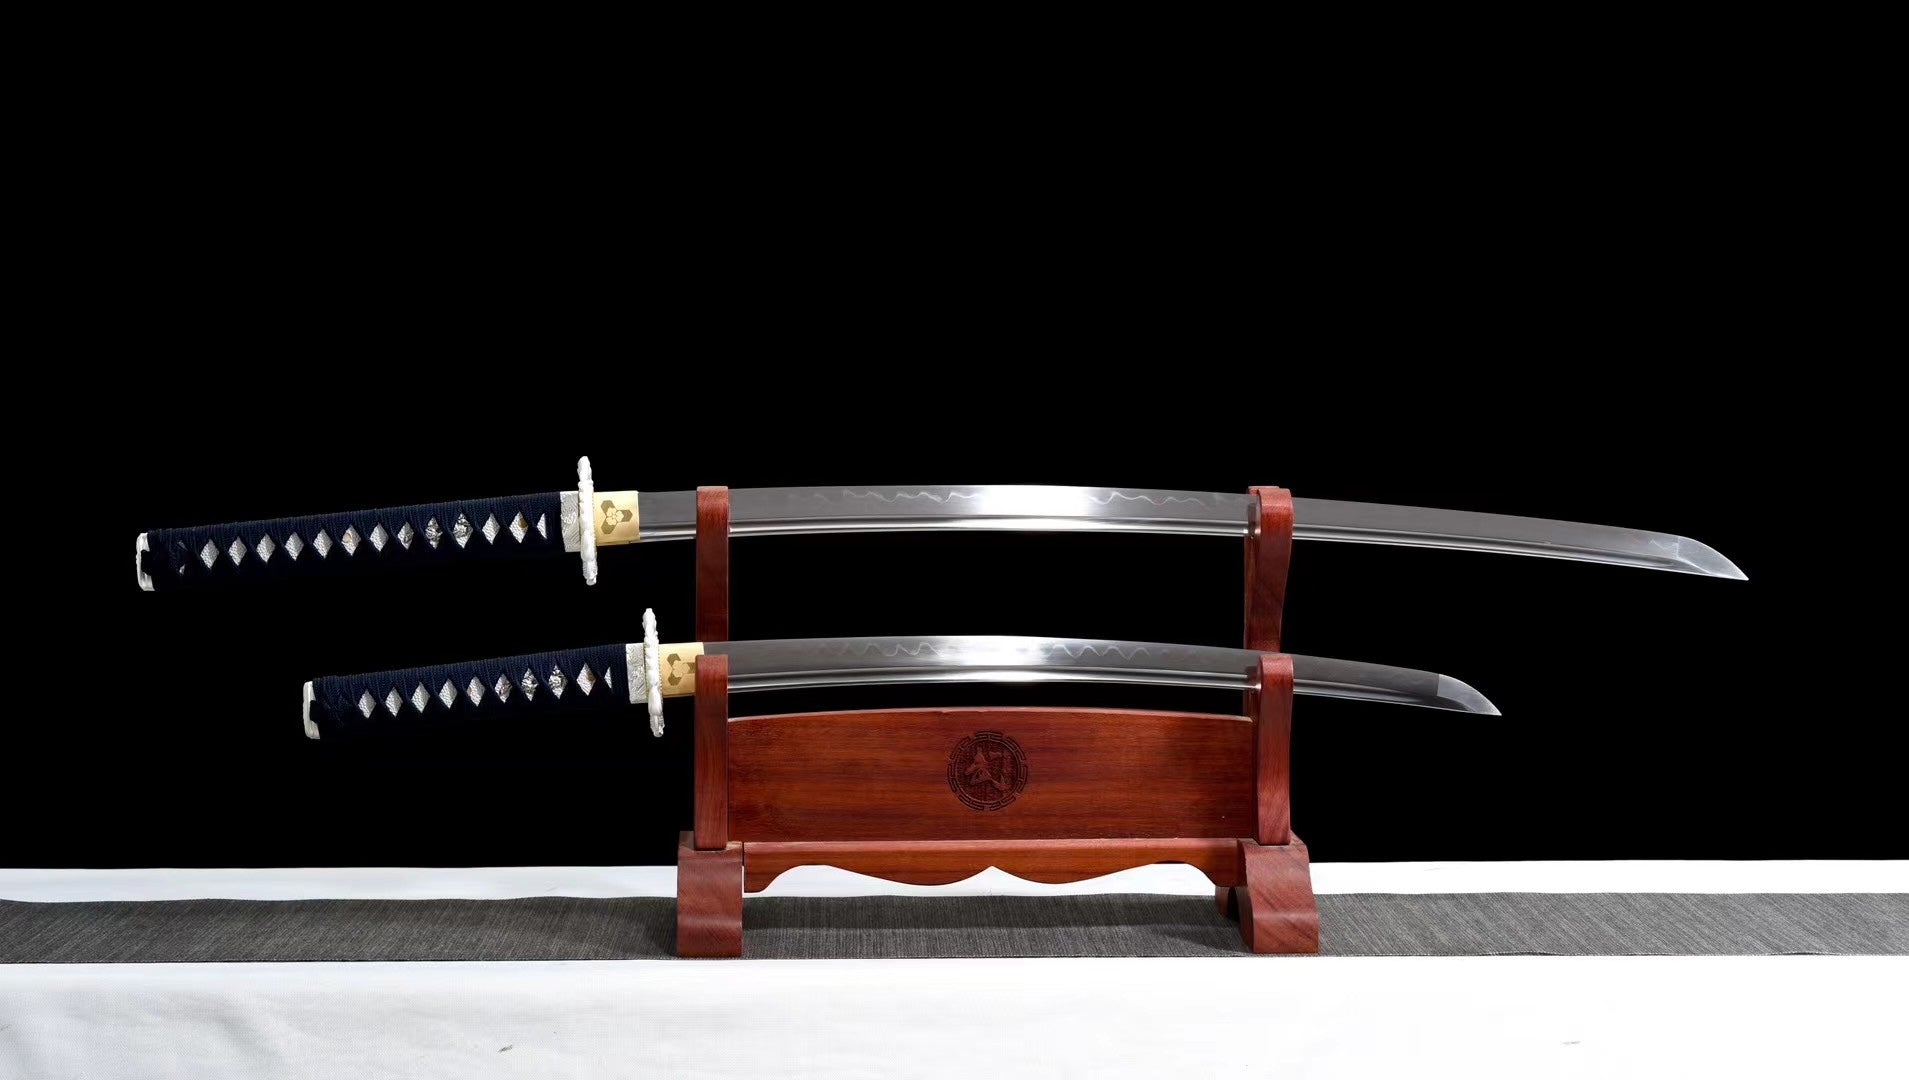 Koi Carp Katana Set, Katana, and Wakizashi Sword,Japanese Samurai Sword,Real Katana,Handmade sword,T10 Steel Clay Tempered With Hamon